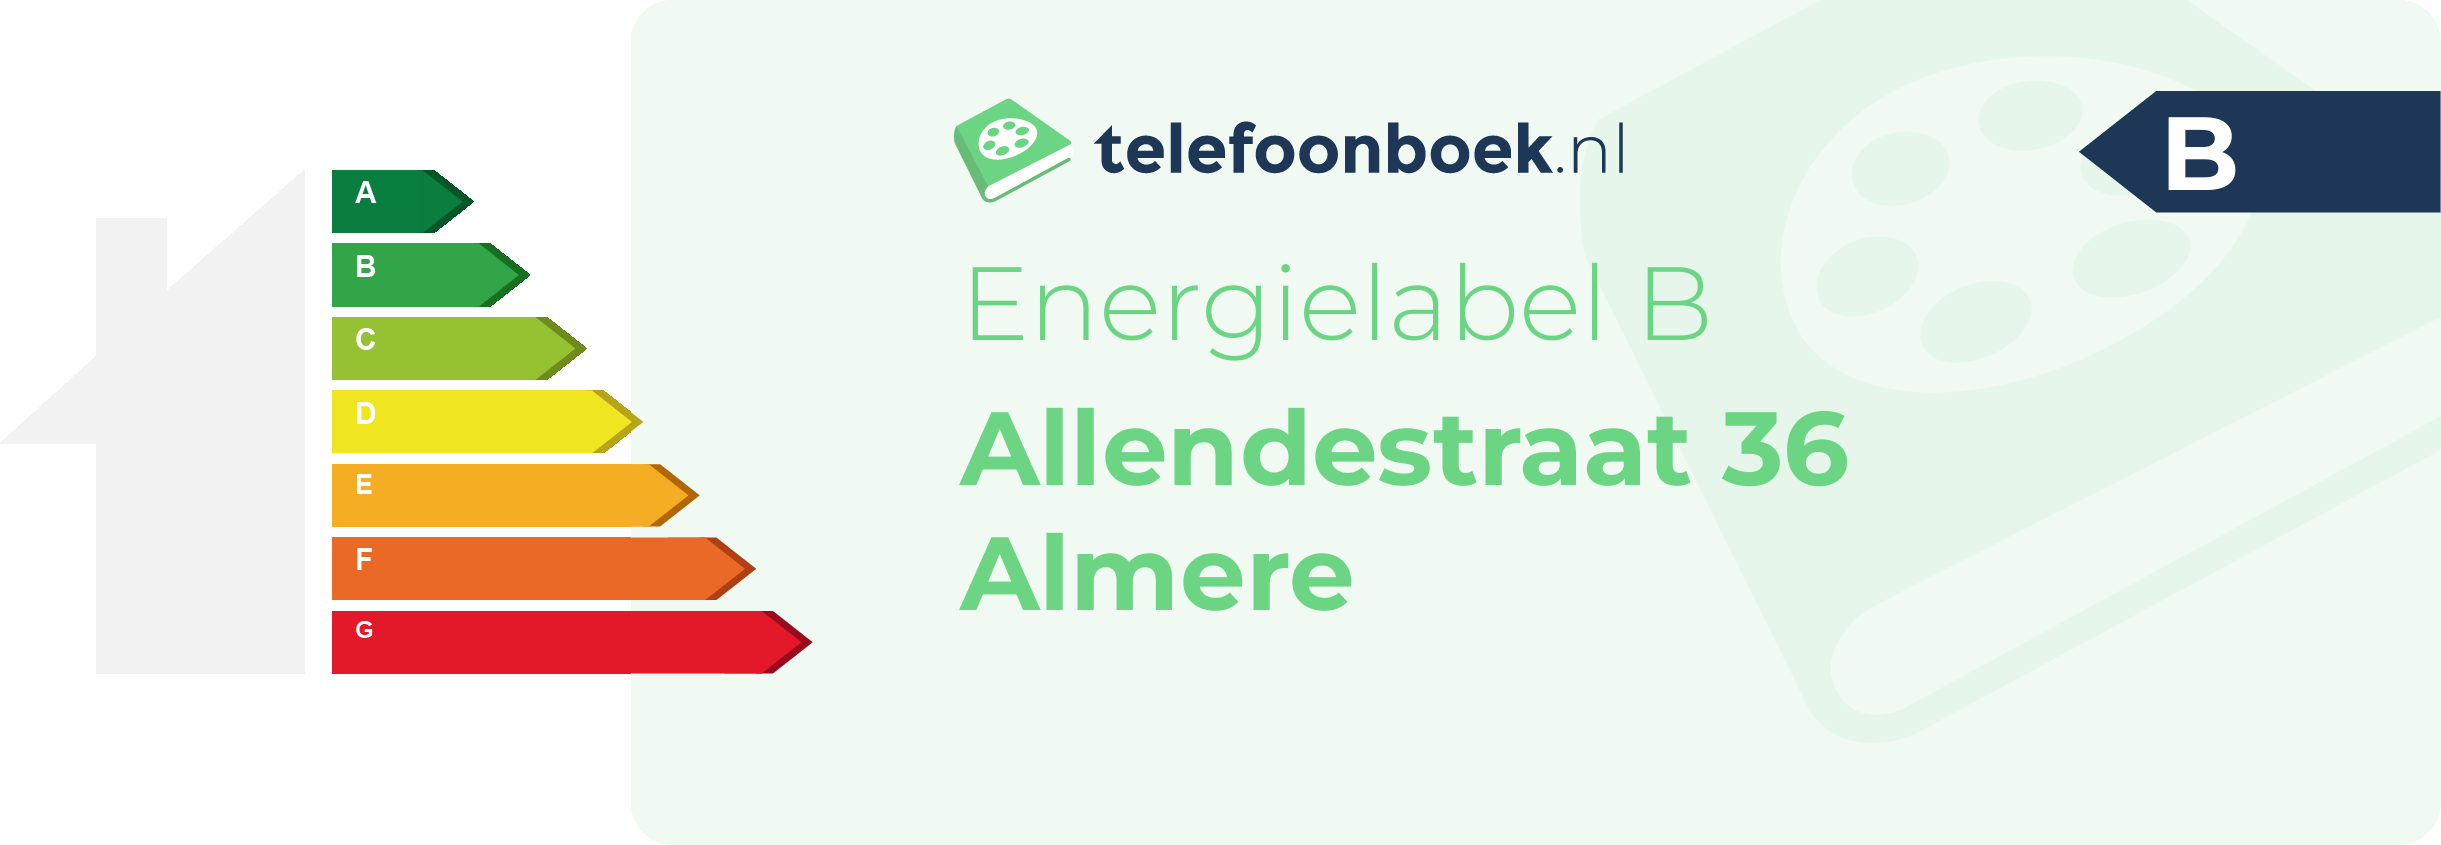 Energielabel Allendestraat 36 Almere